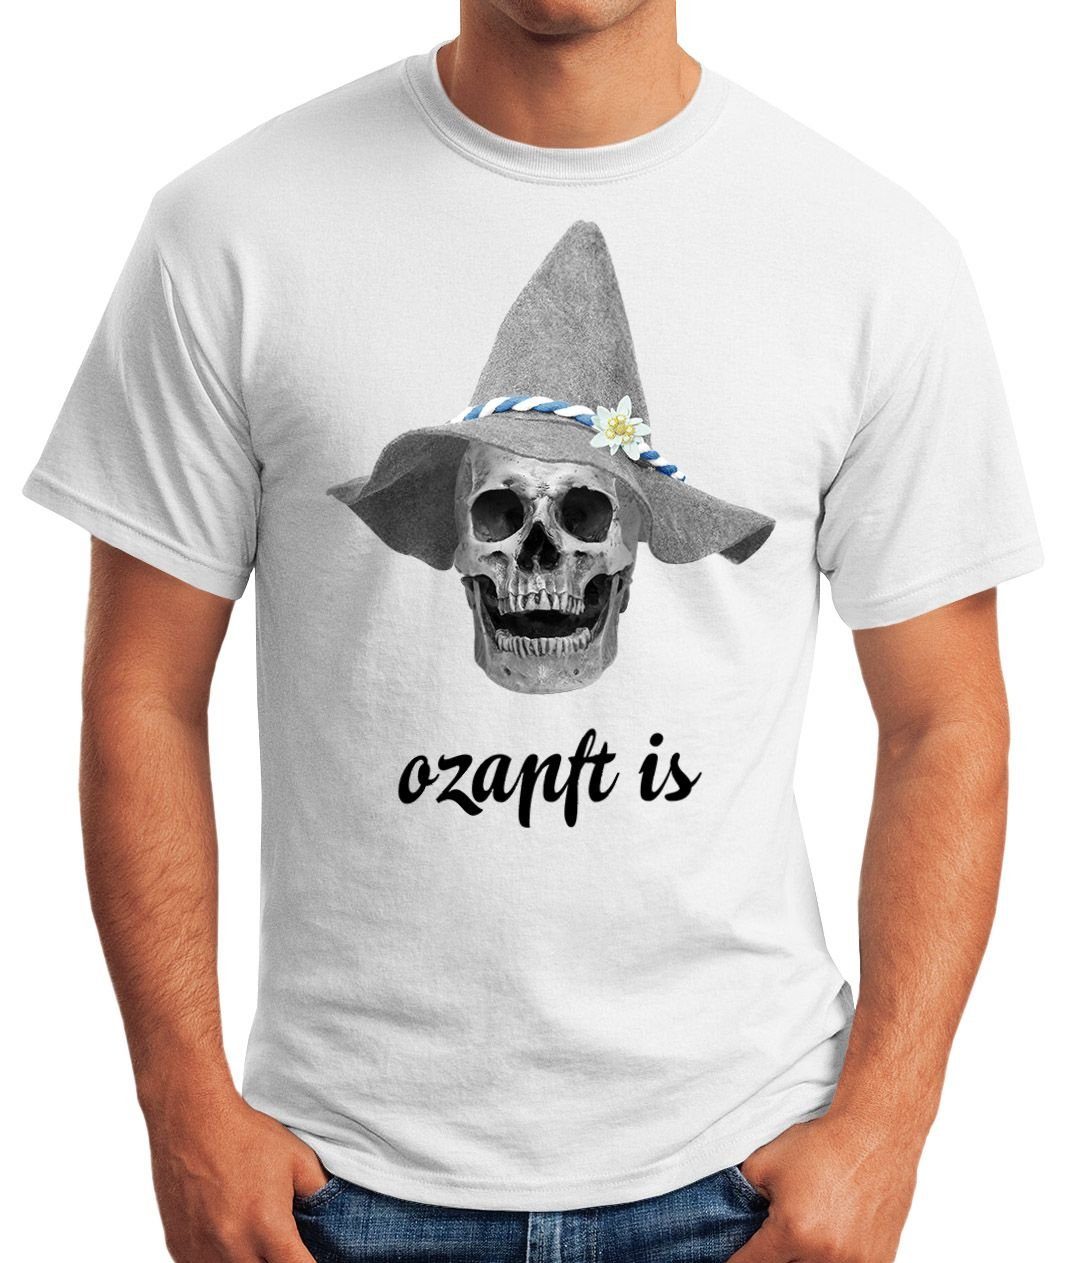 MoonWorks Print-Shirt T-Shirt Volksfest Print Totenkopf is Filzhut ozapft Moonworks® Bayrisch Bayern Skull mit Fun-Shirt Herren